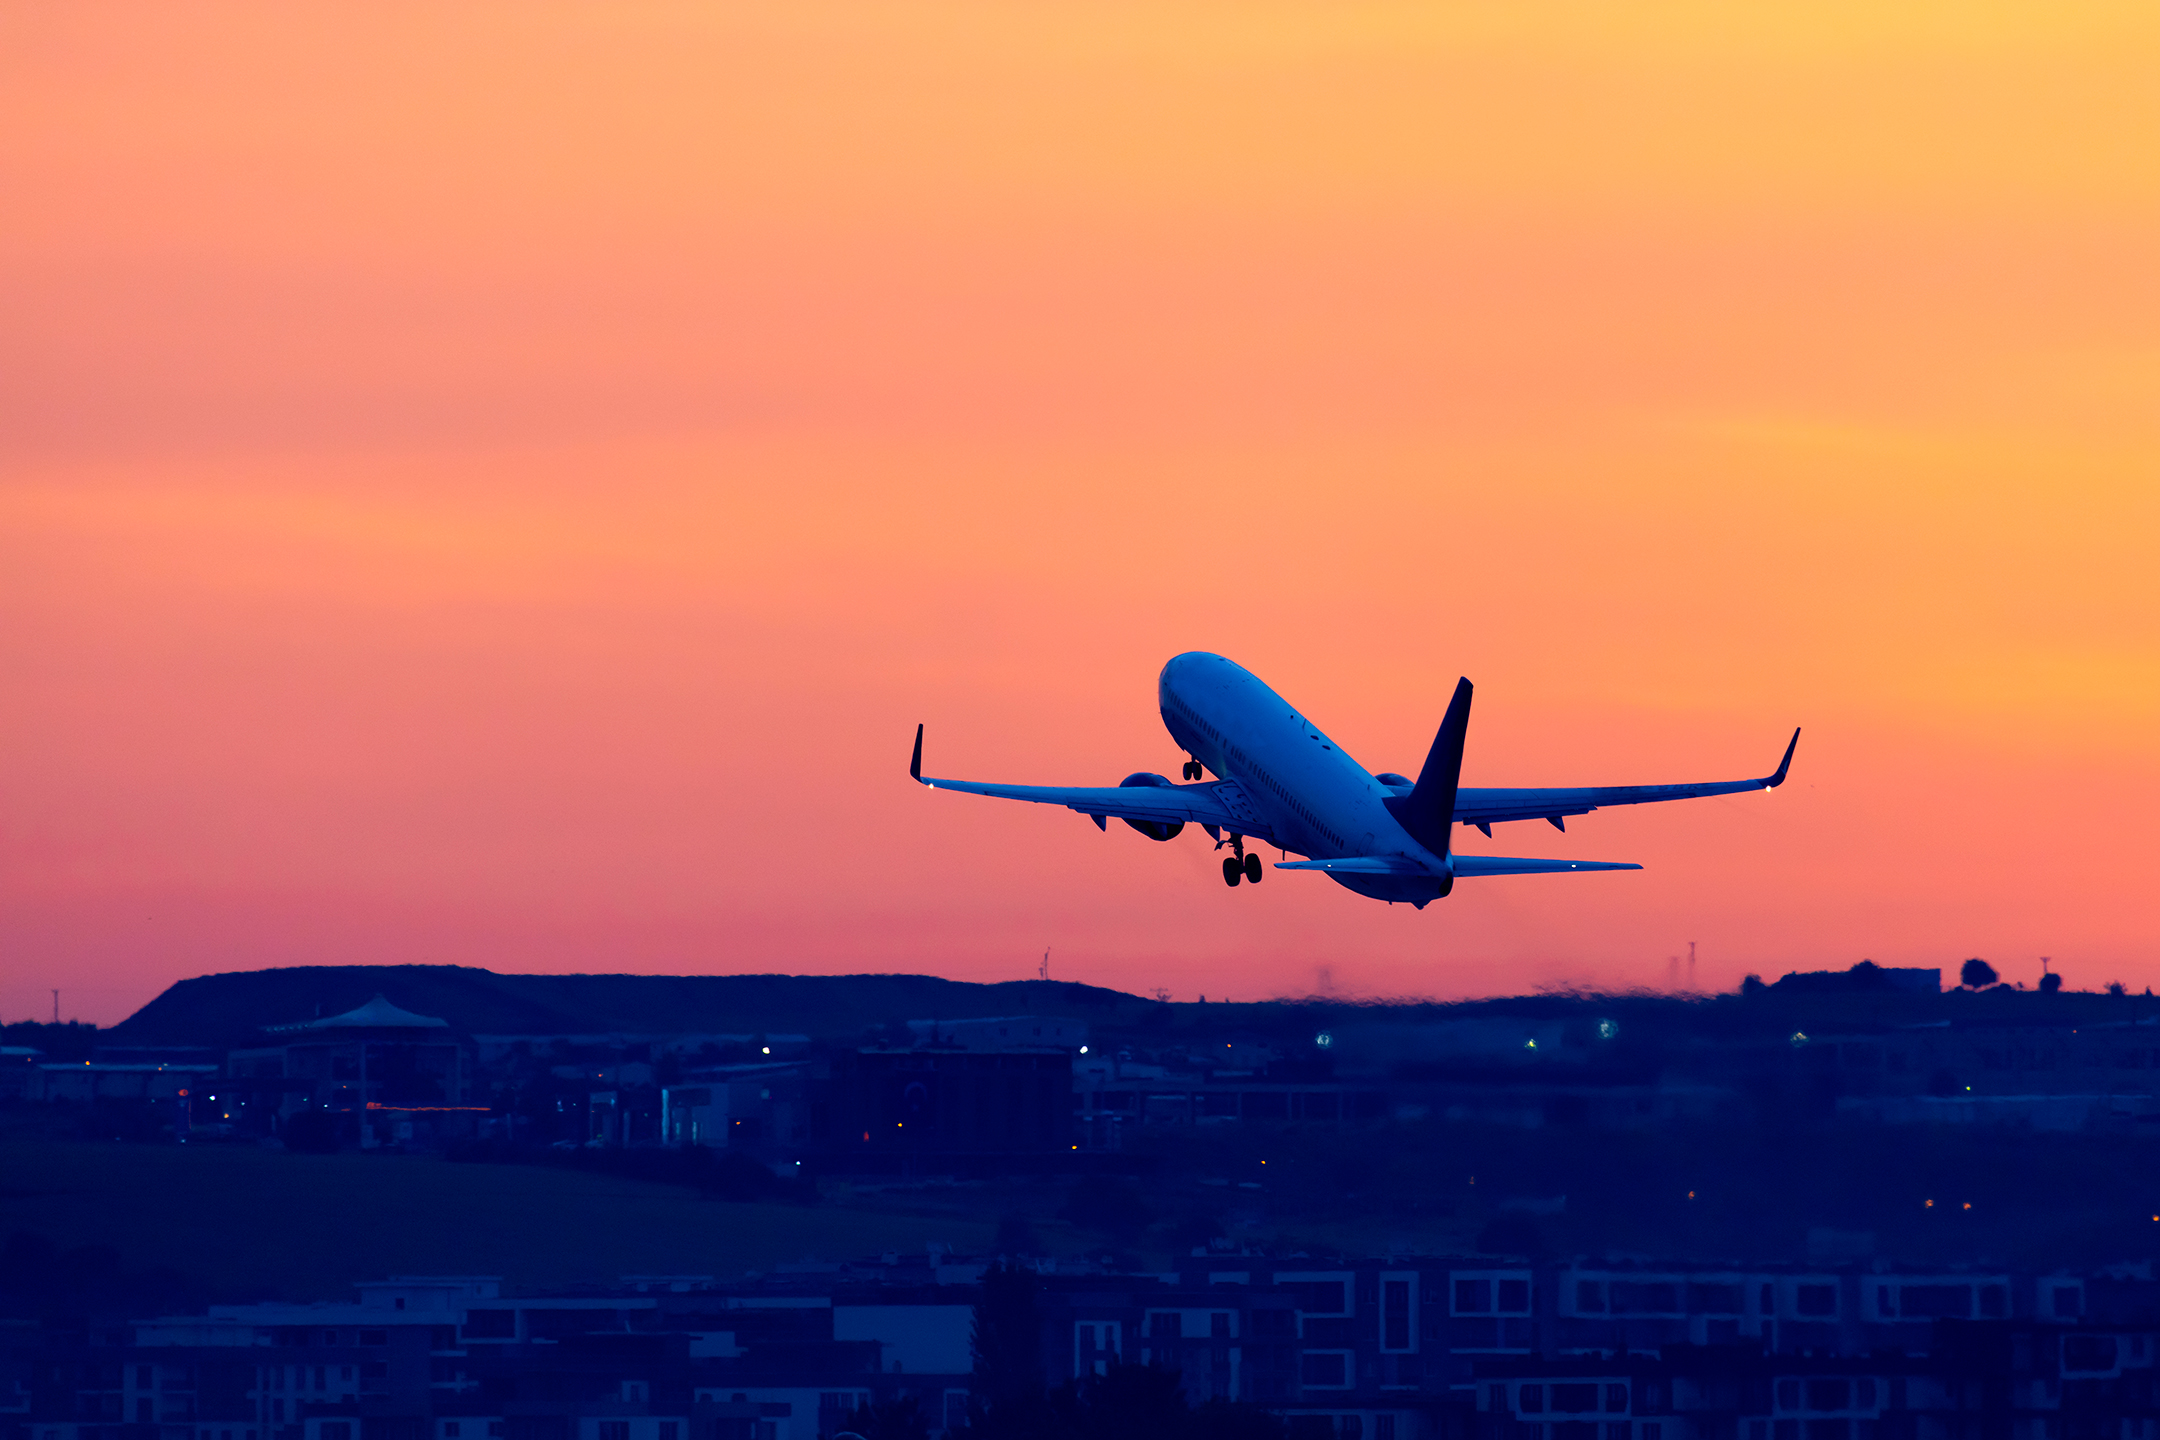 Passenger airplane taking off on sunset